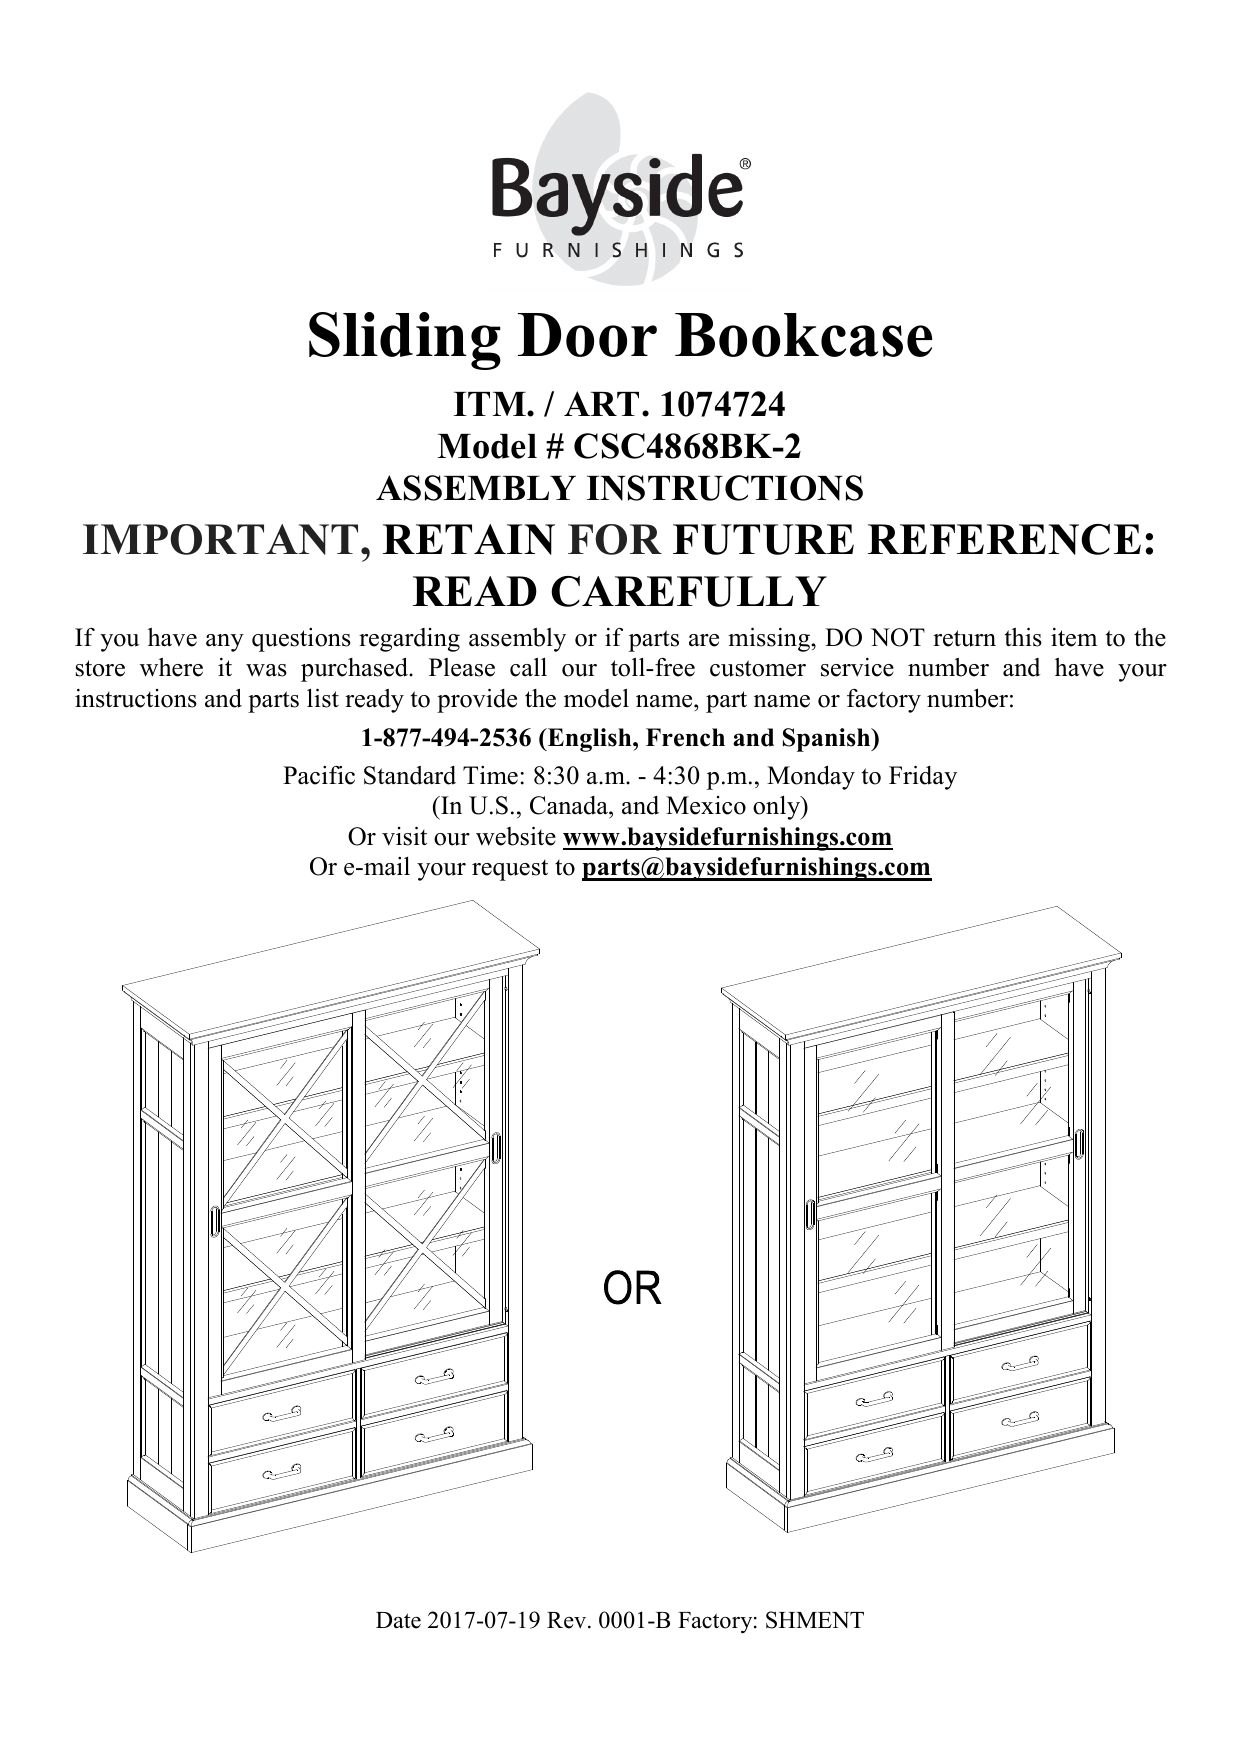 Sliding Door Bookcase User Manual, Bayside Furnishings Sliding Door Bookcase